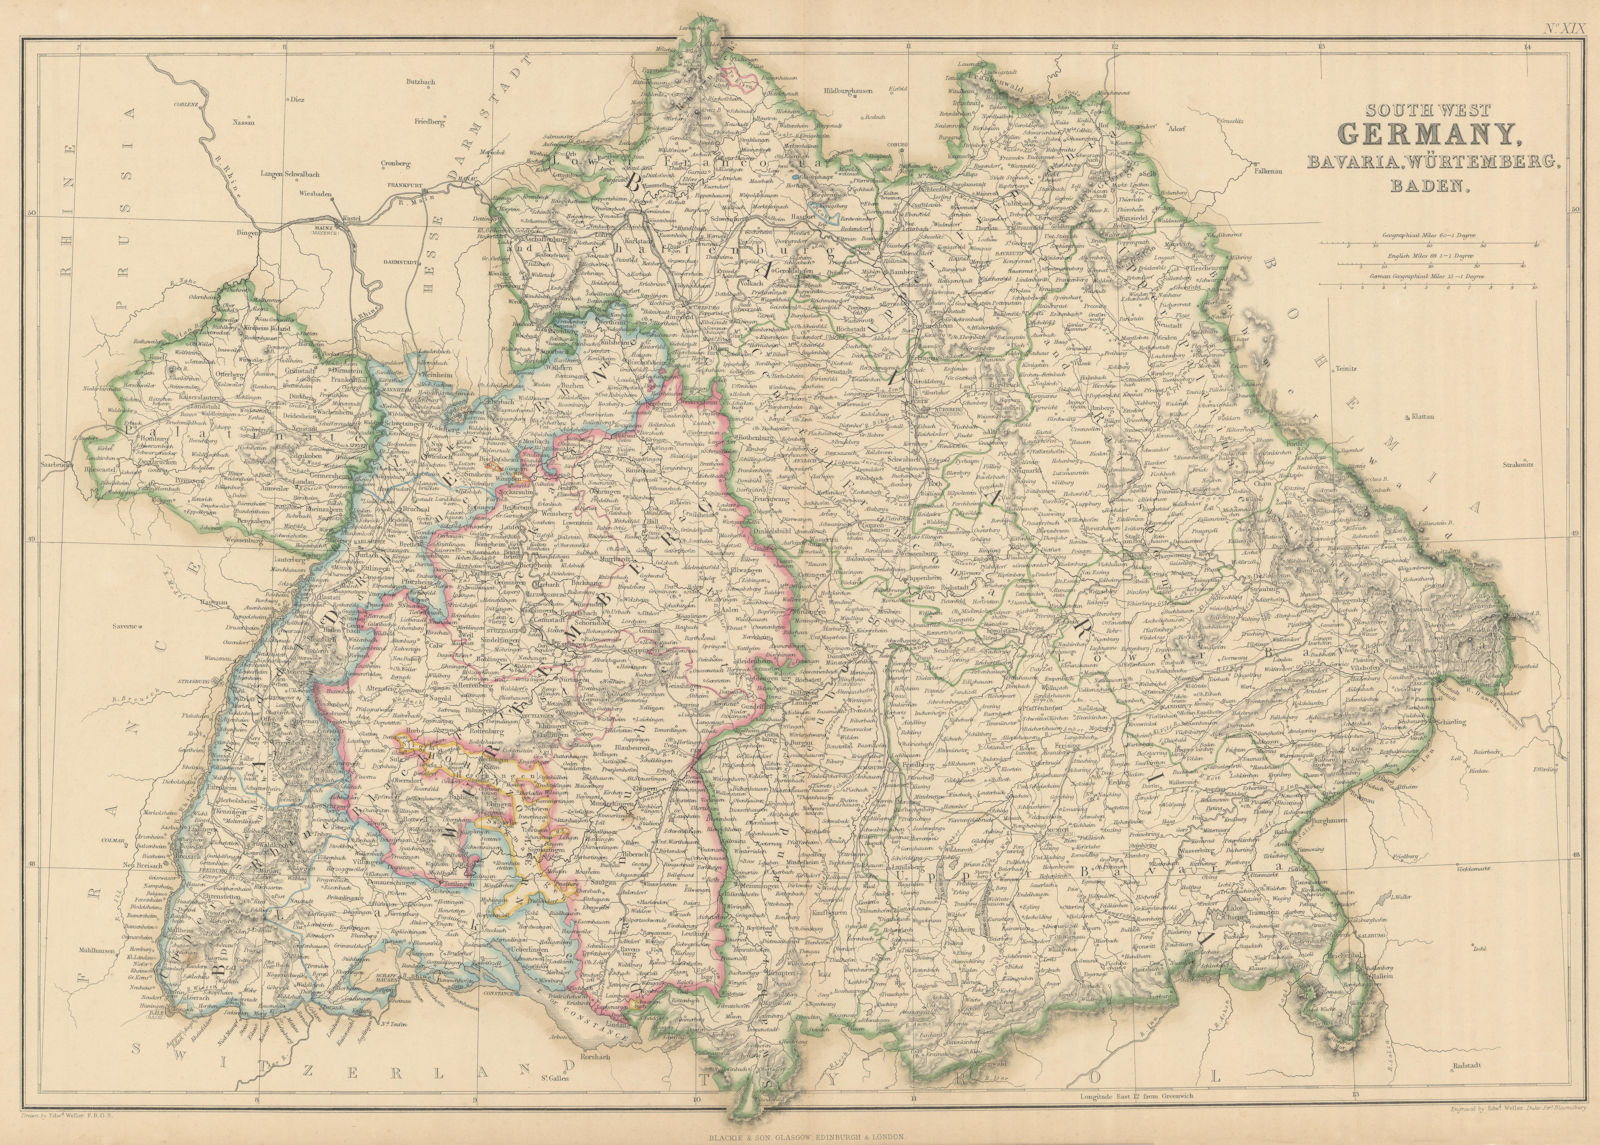 Associate Product South-West Germany, Bavaria, Würtemberg & Baden. Bayern. WELLER 1860 old map